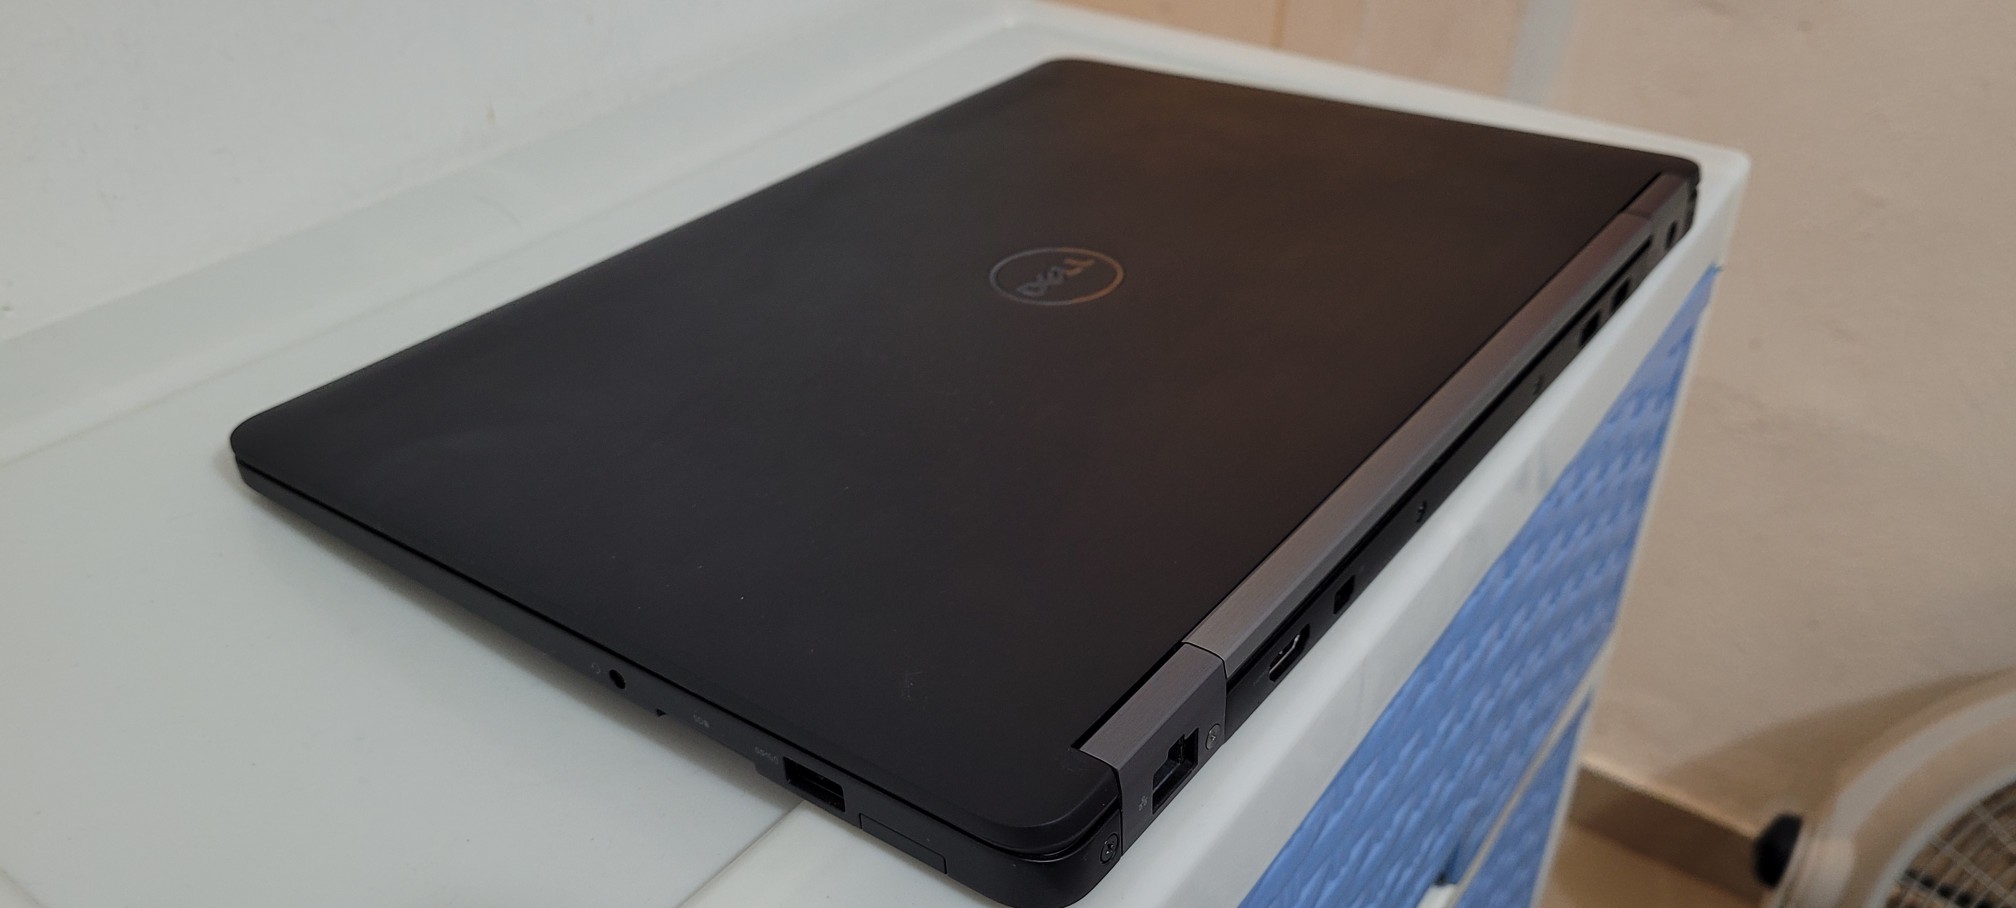 computadoras y laptops - Dell 7480 14 Pulg Core i5 7ma Gen Ram 8gb ddr4 Disco 128gb Solido Wifi 2